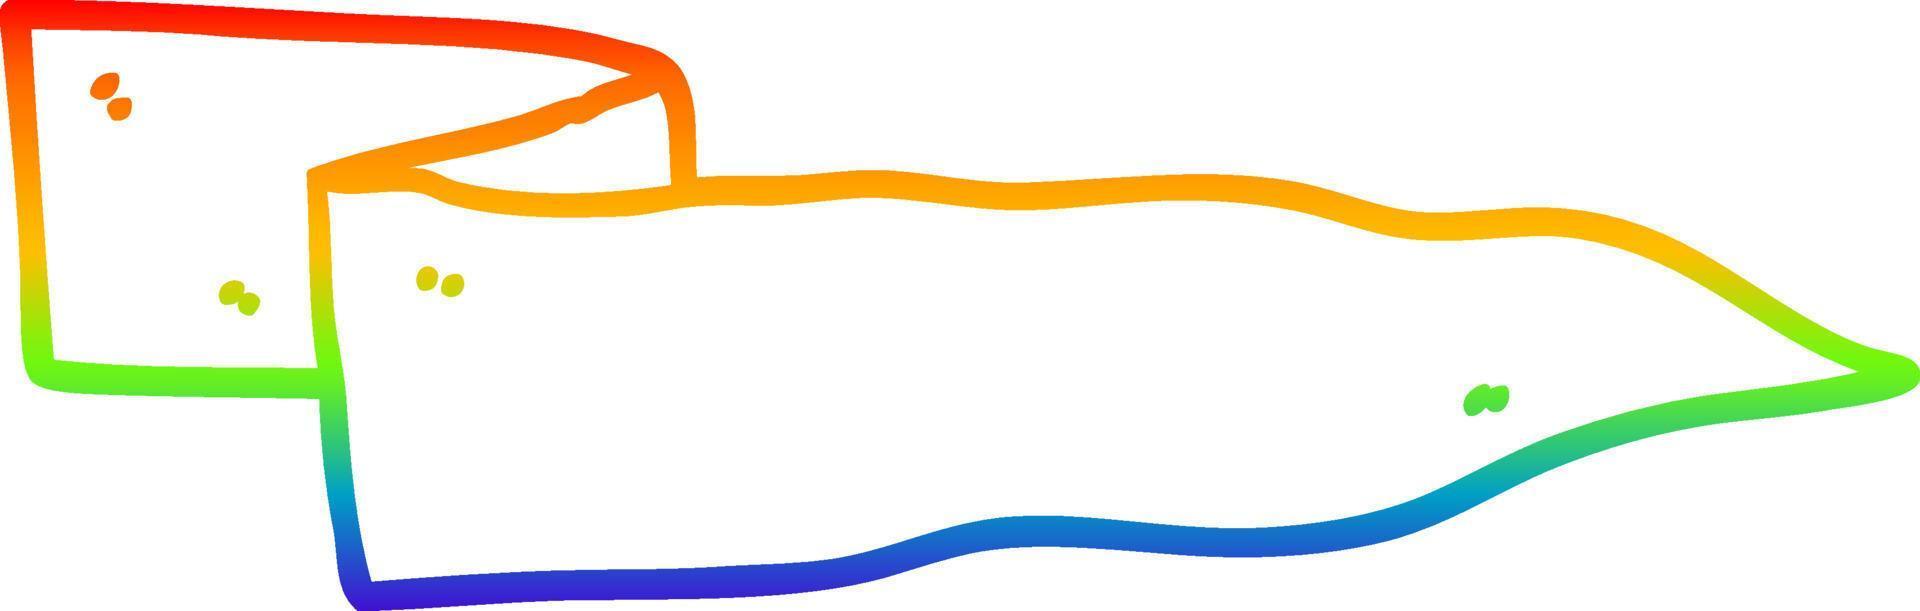 rainbow gradient line drawing cartoon waving banner vector